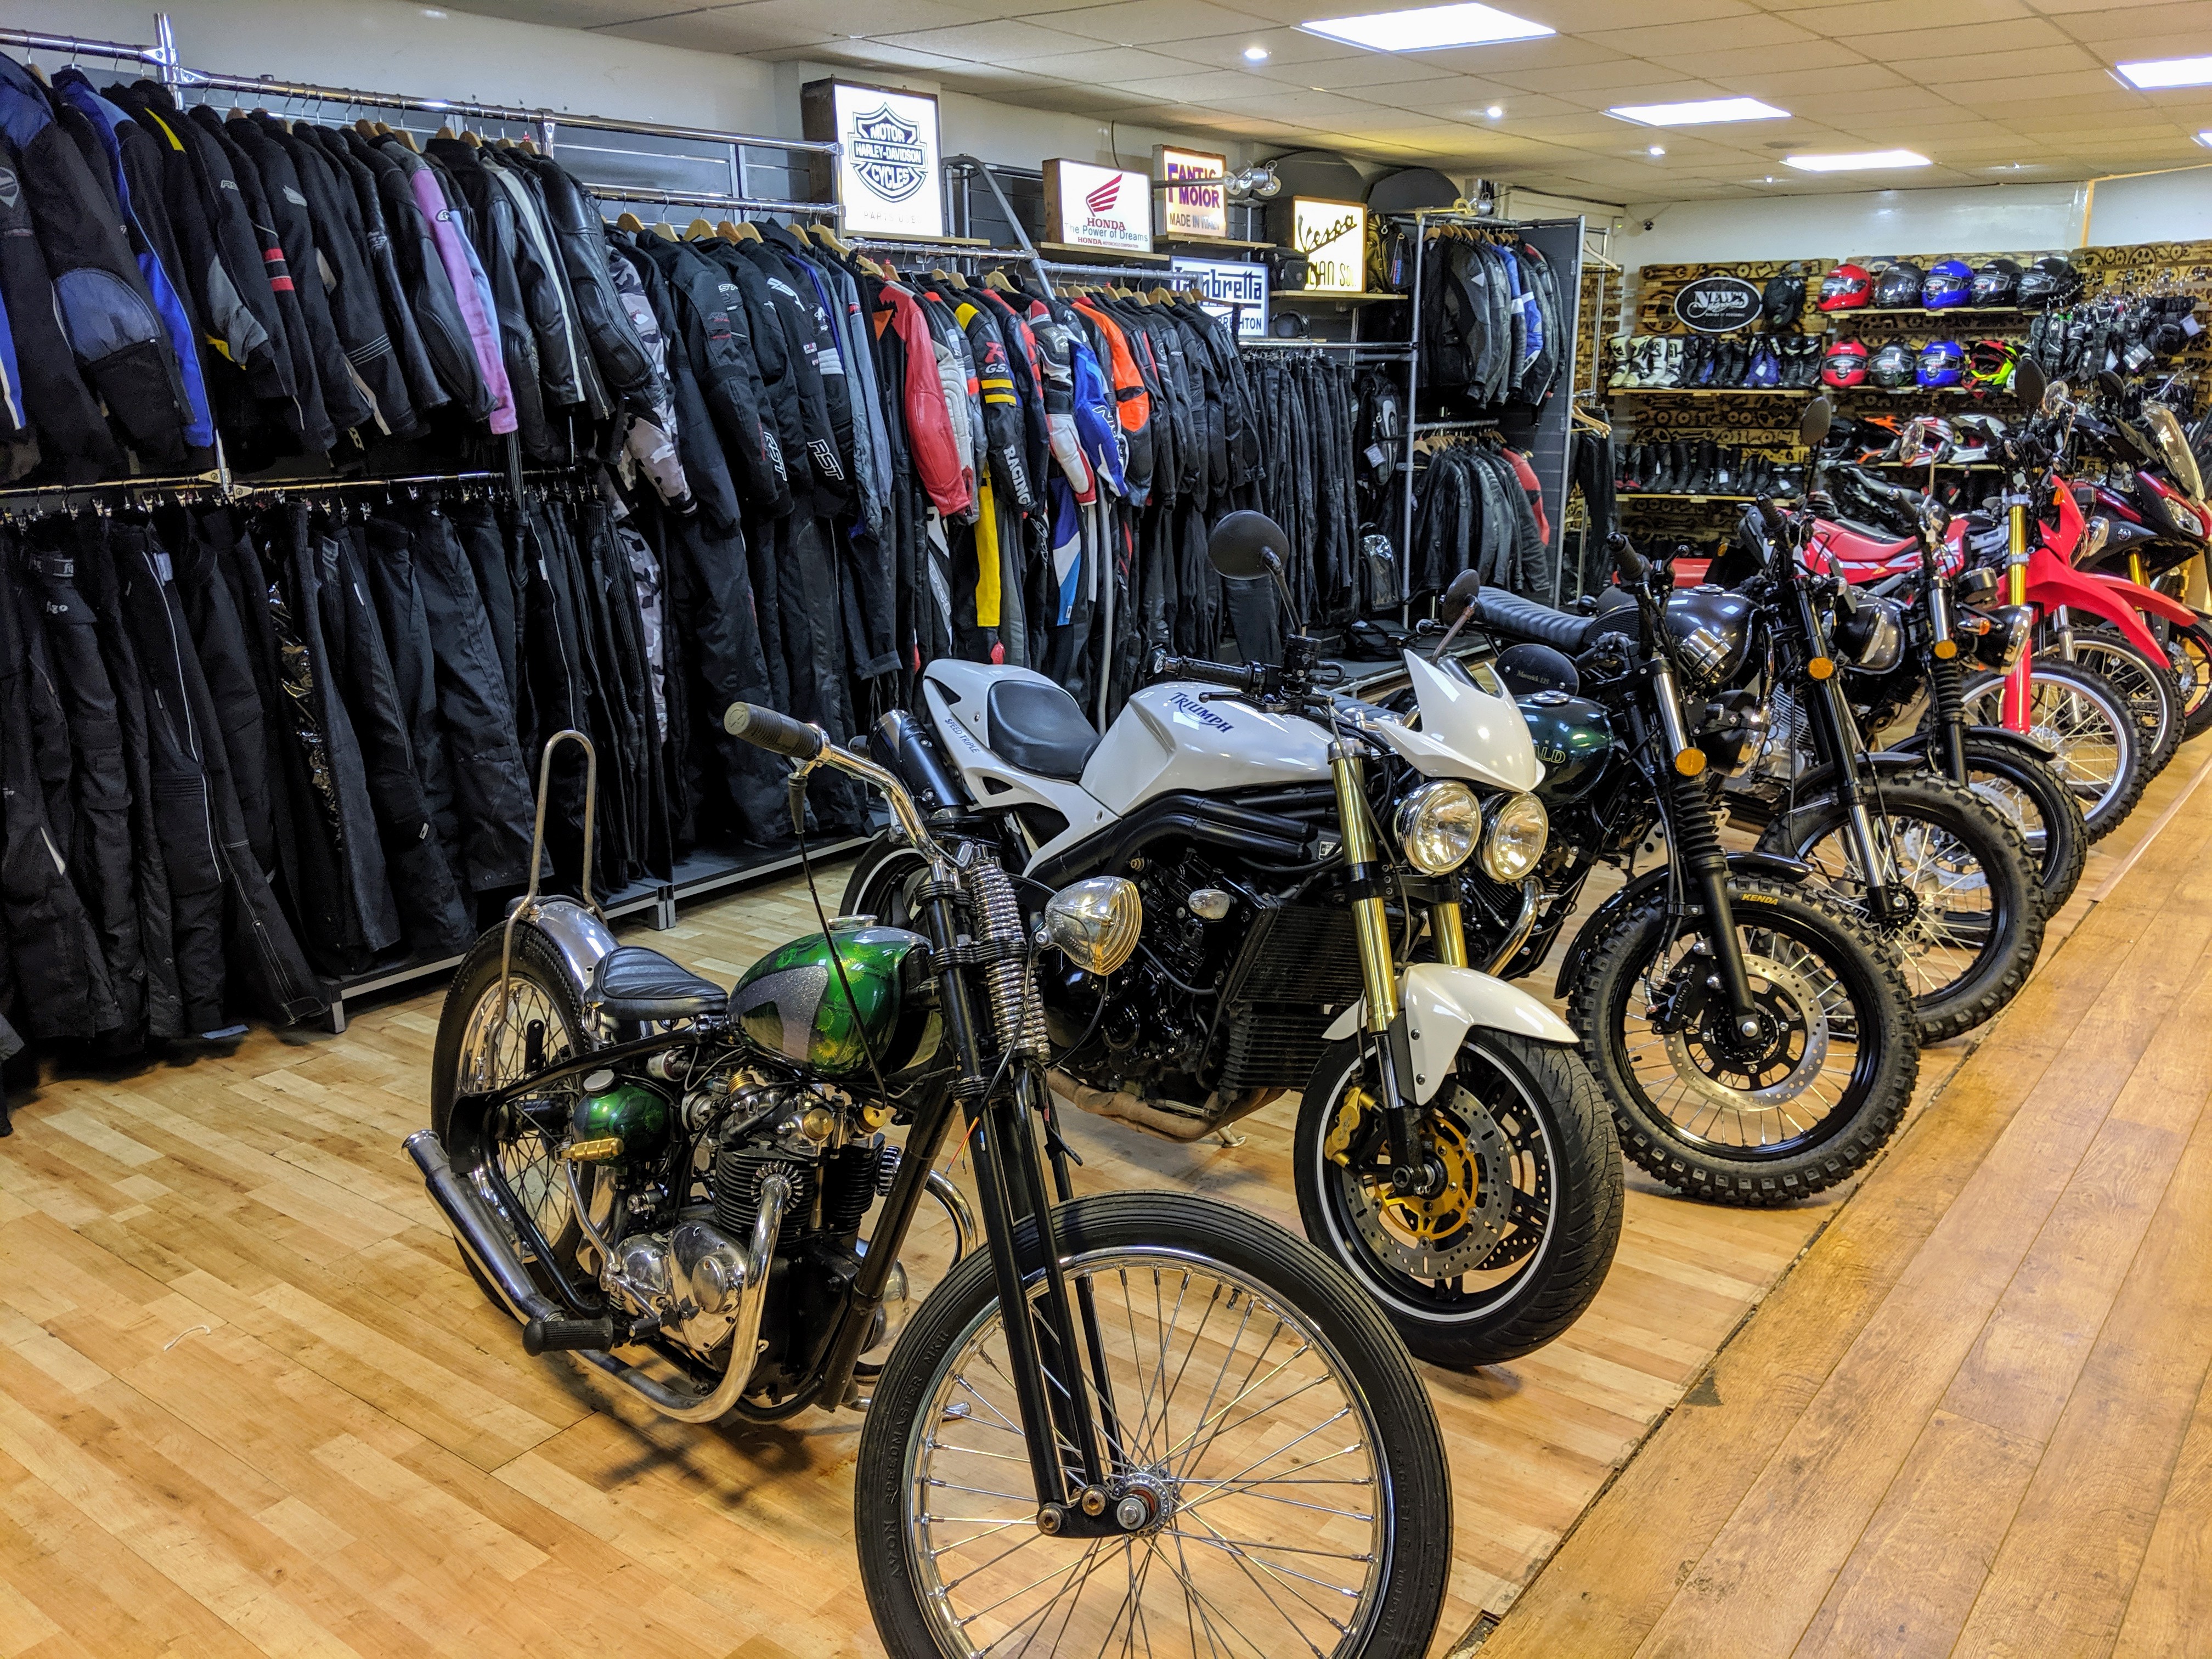 Men's Motorcycle Clothing & Gear Shop